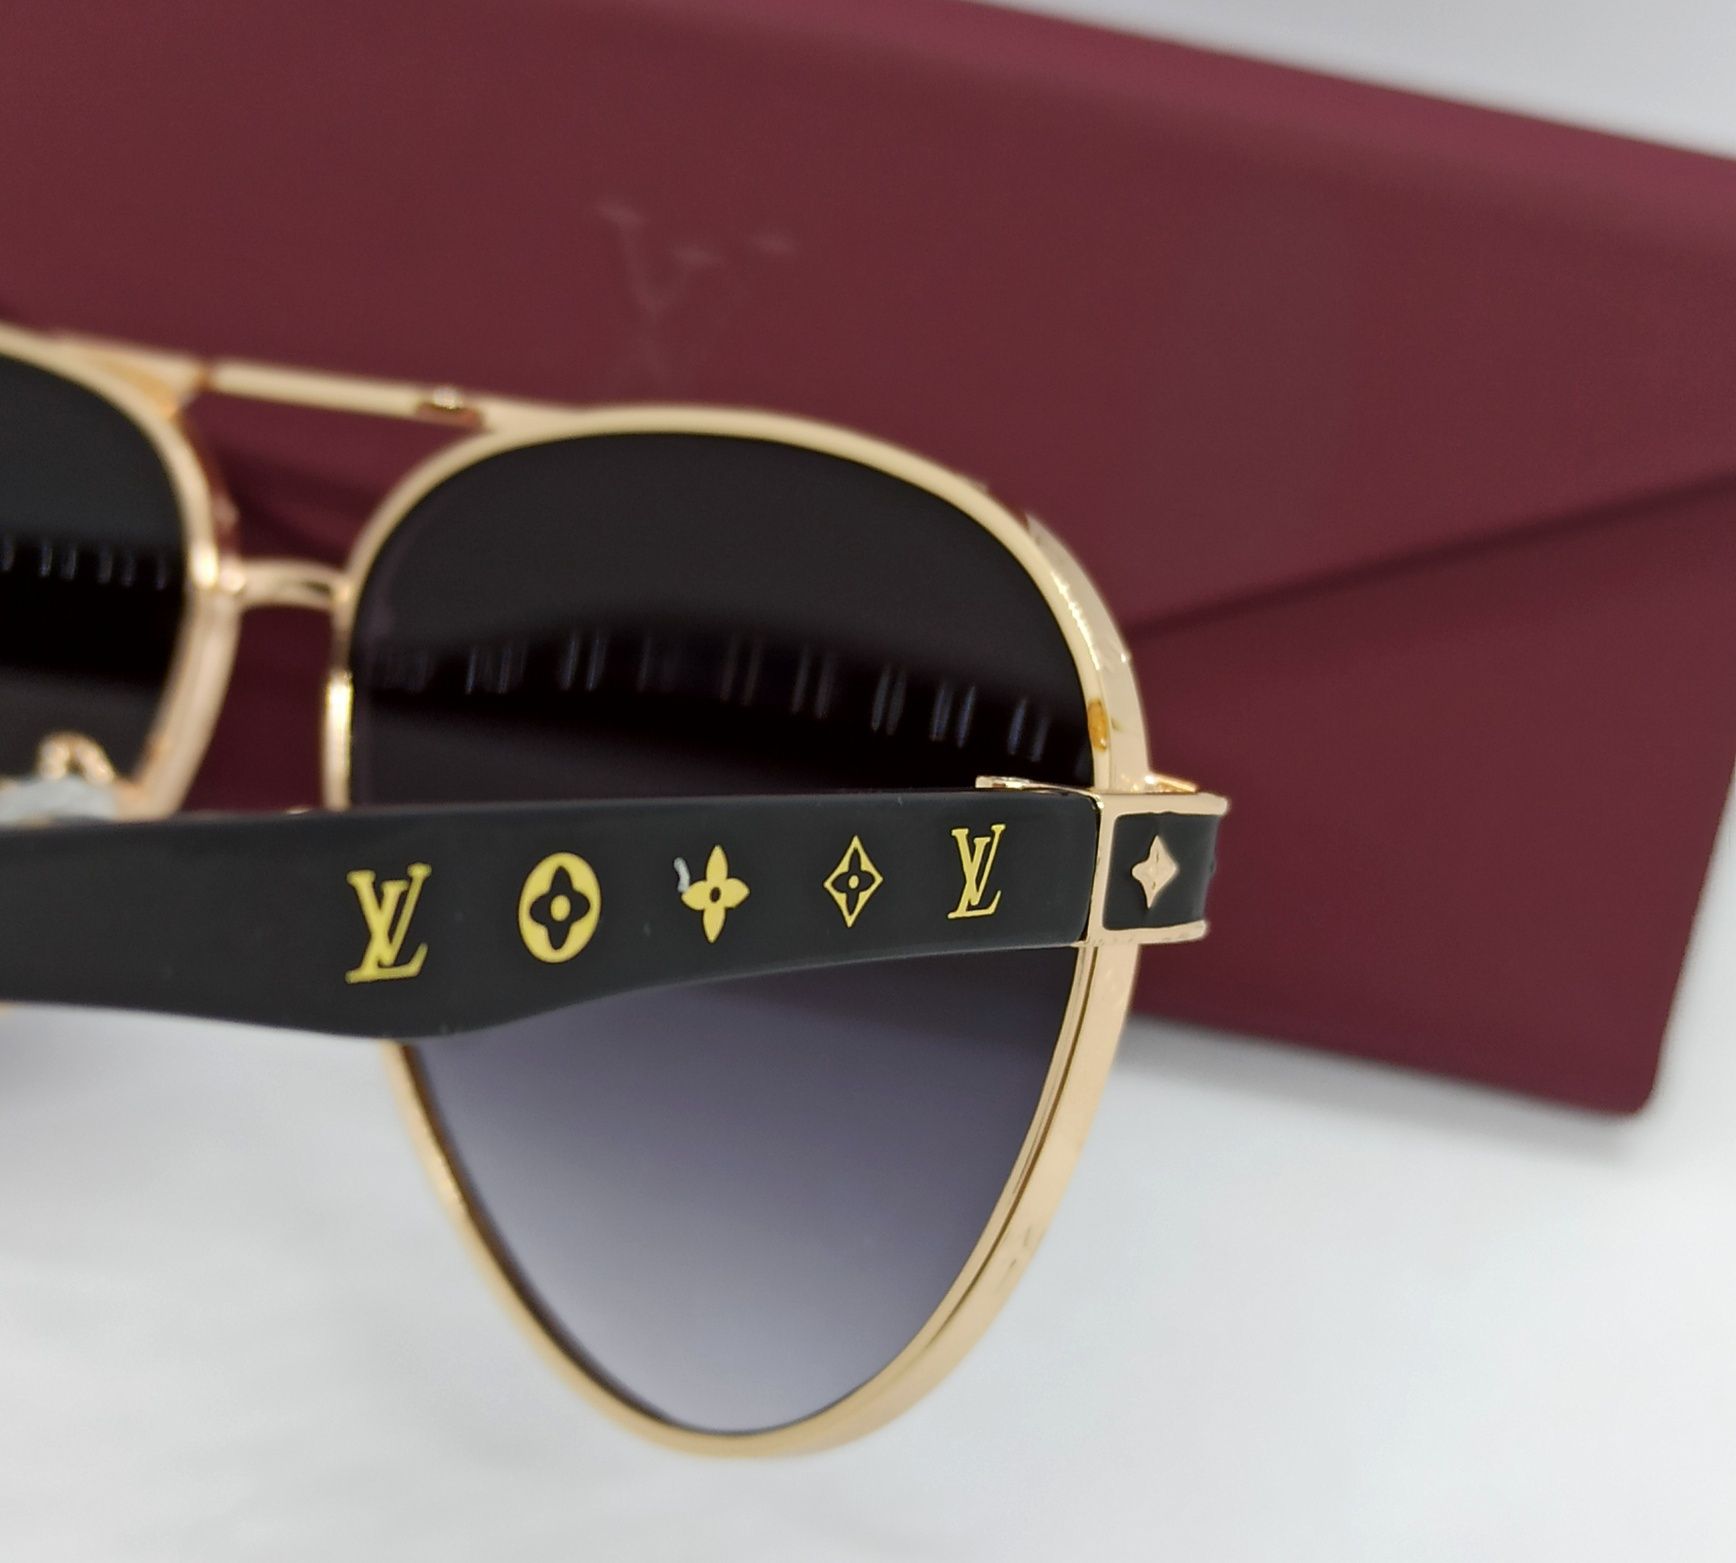 Louis Vuitton очки капли мужские серый градиент в золоте в футляре